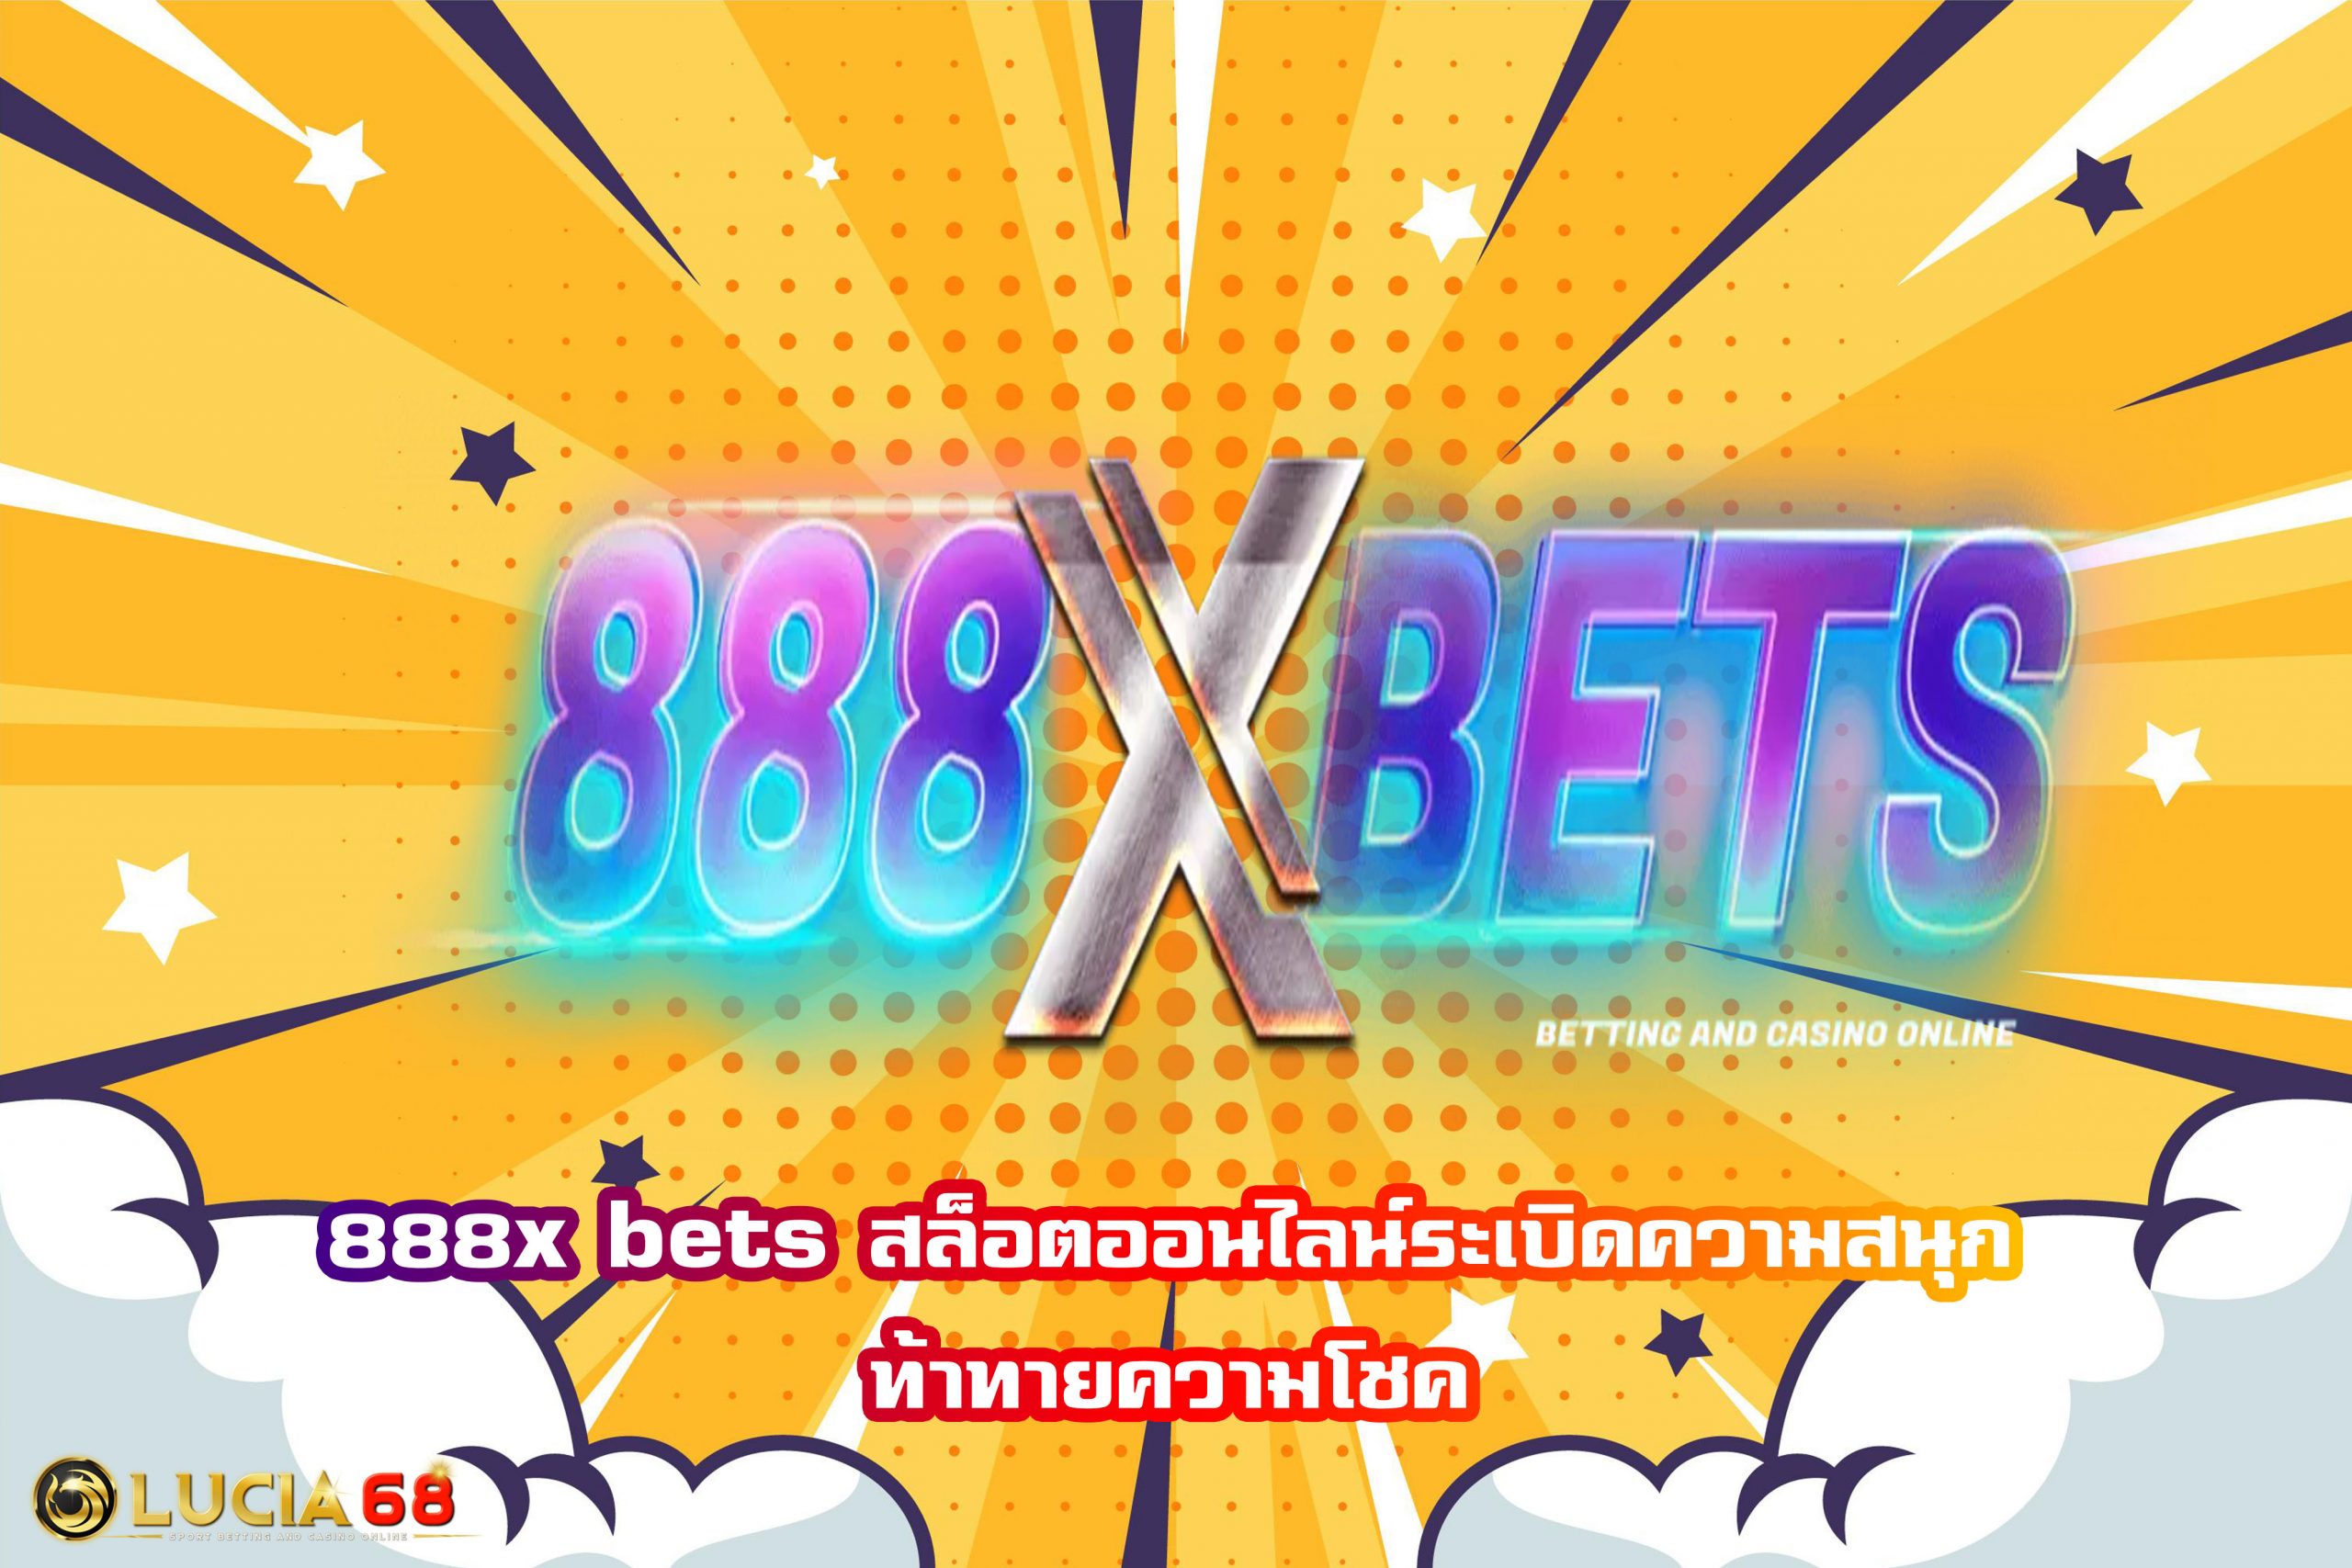 888x bets สล็อตออนไลน์ระเบิดความสนุก ท้าทายความโชค